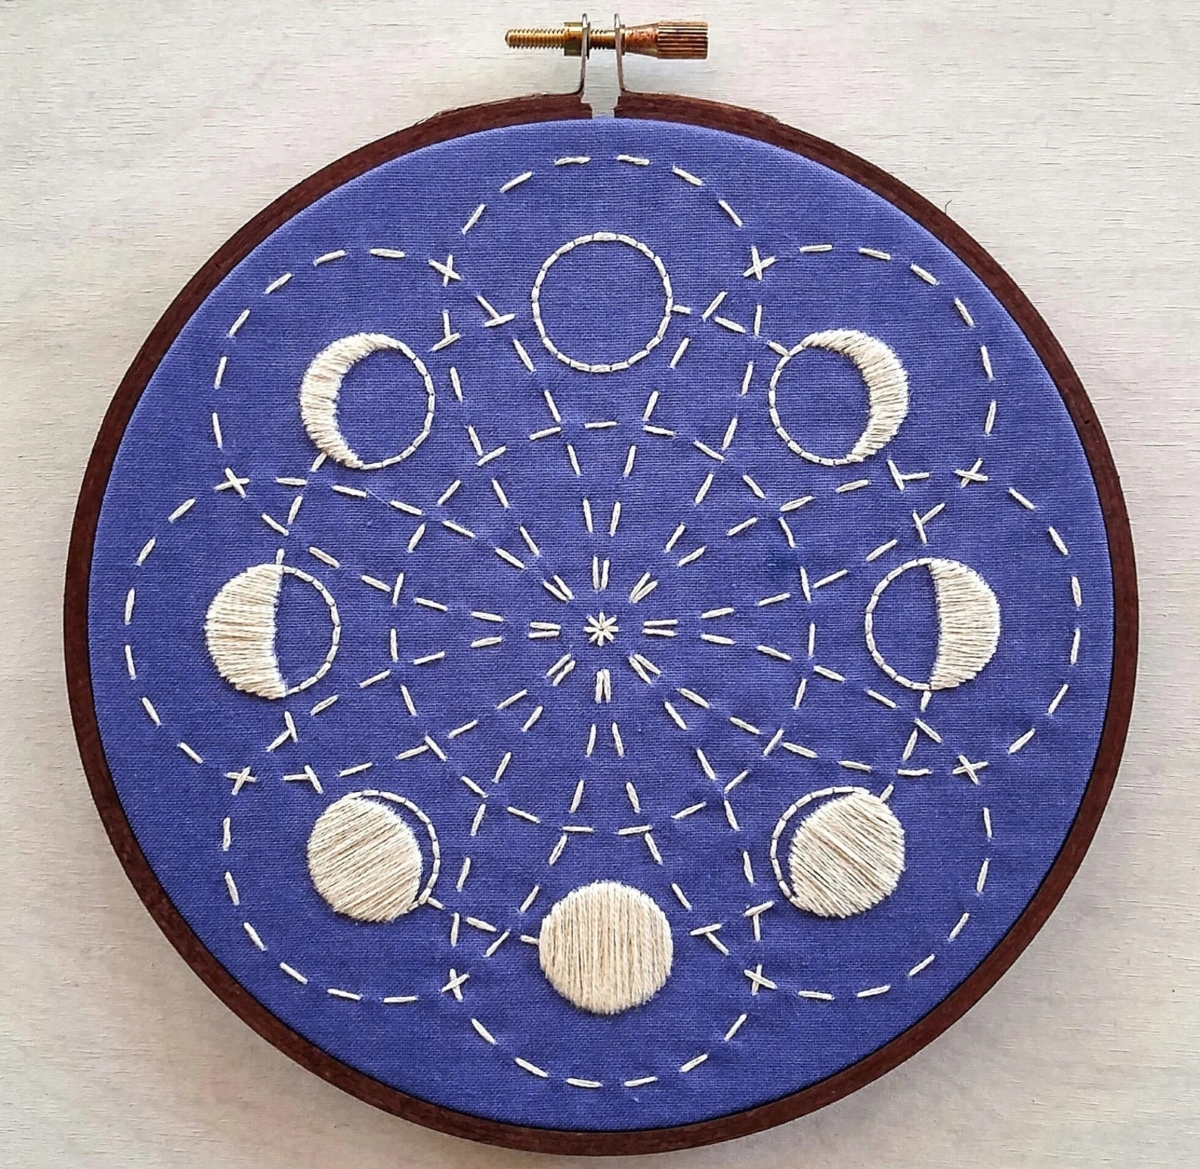 Lunar embroidery design